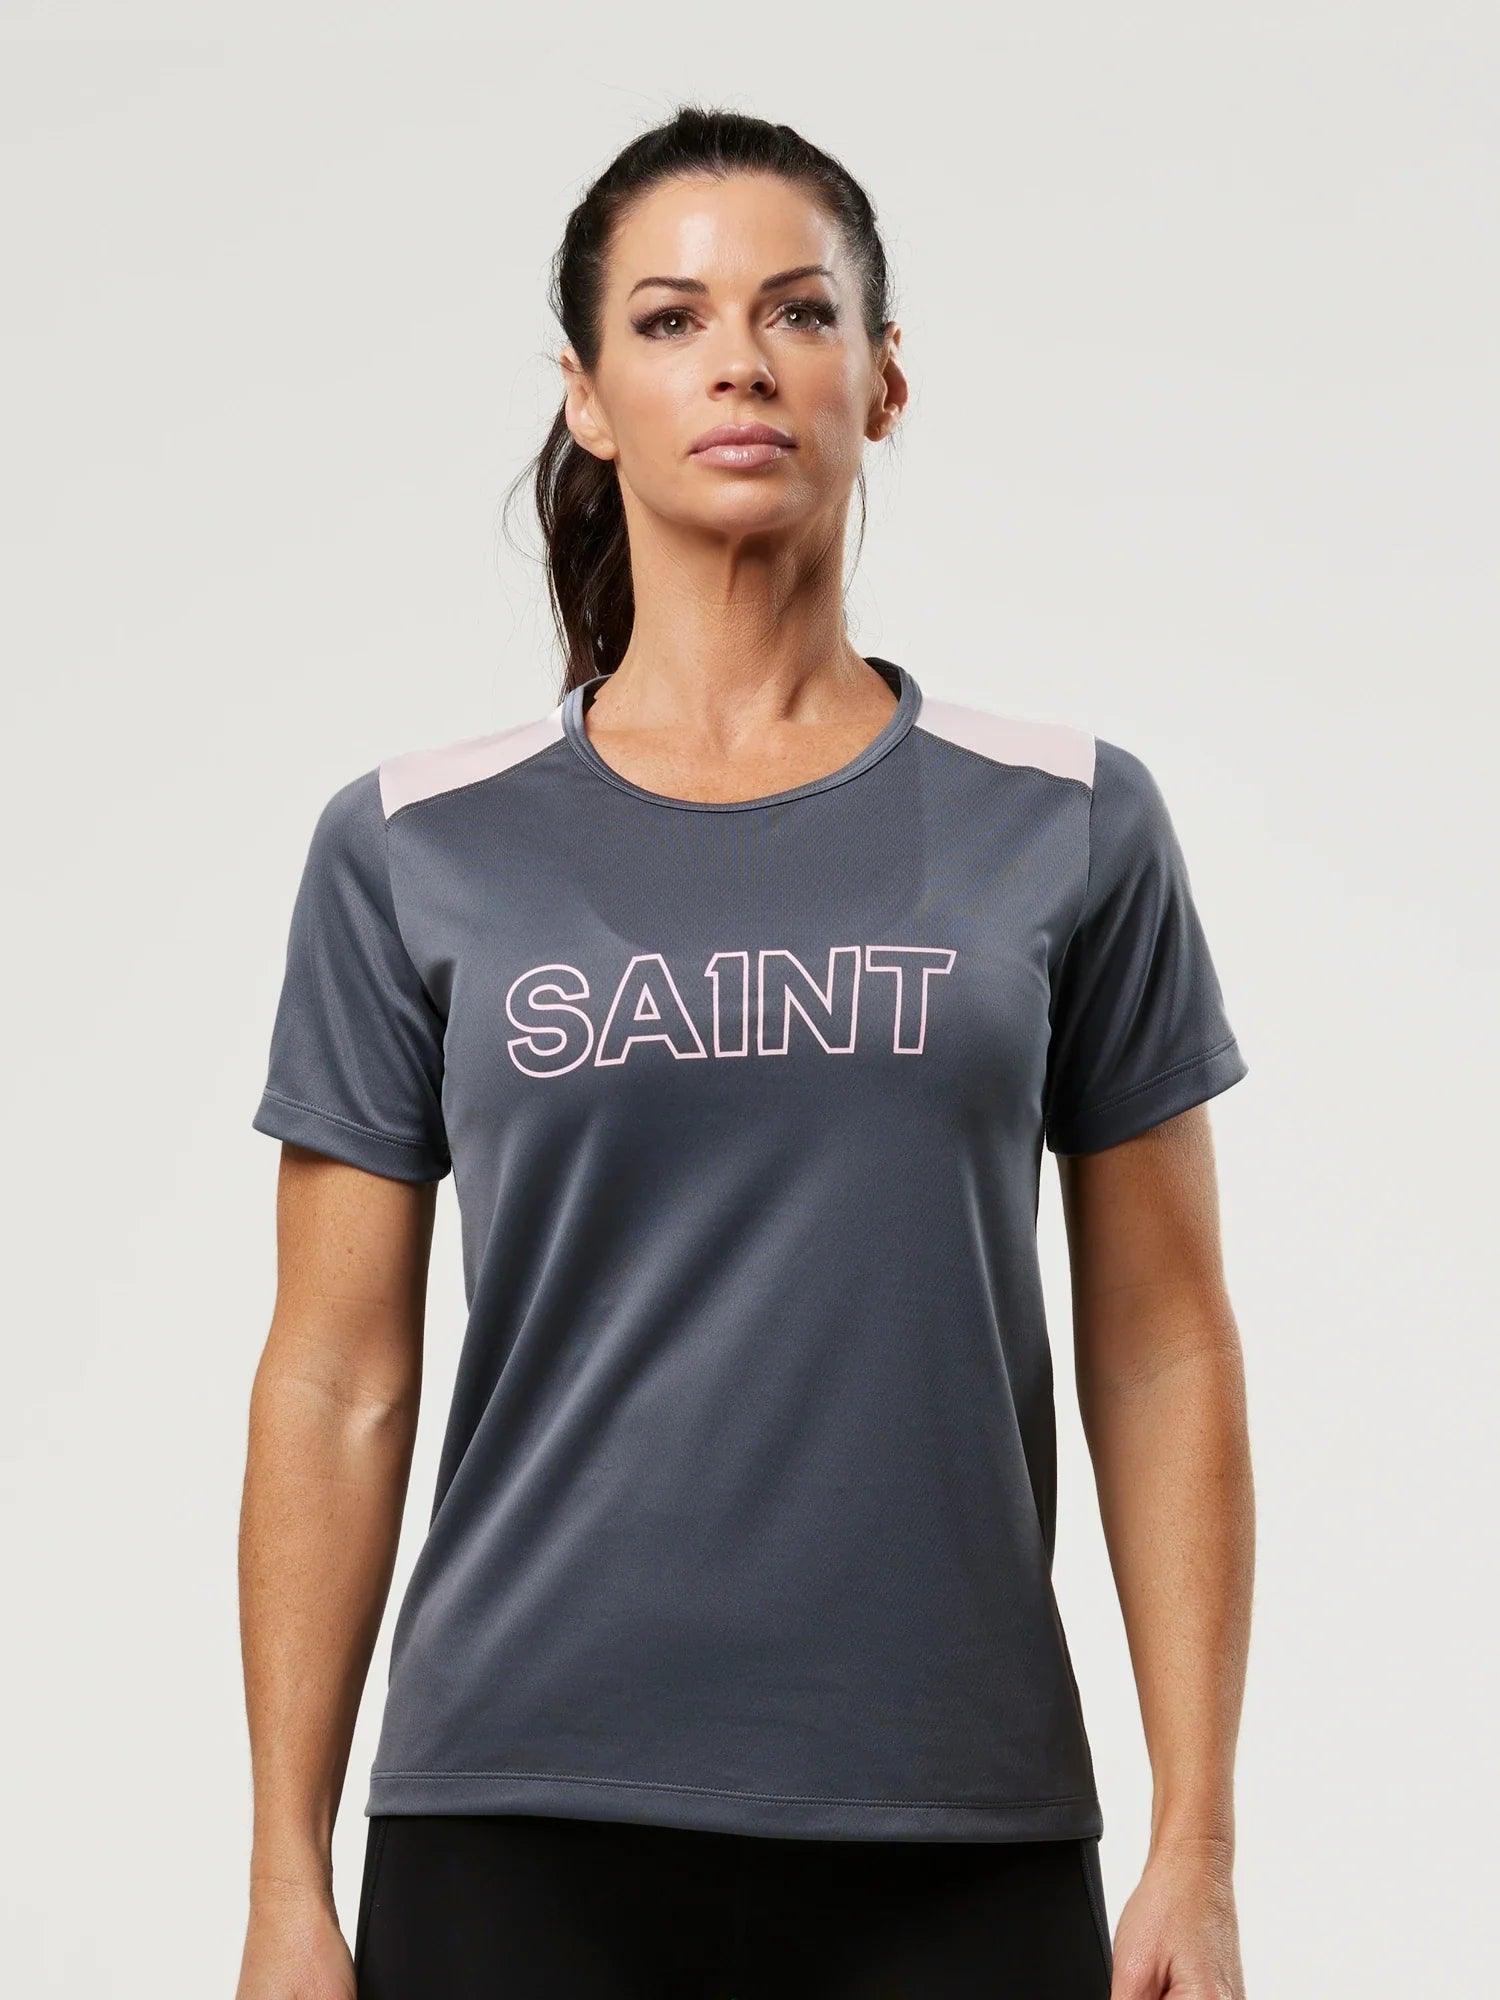 Women's Training T-shirt - Charcoal | SA1NT LAYERS